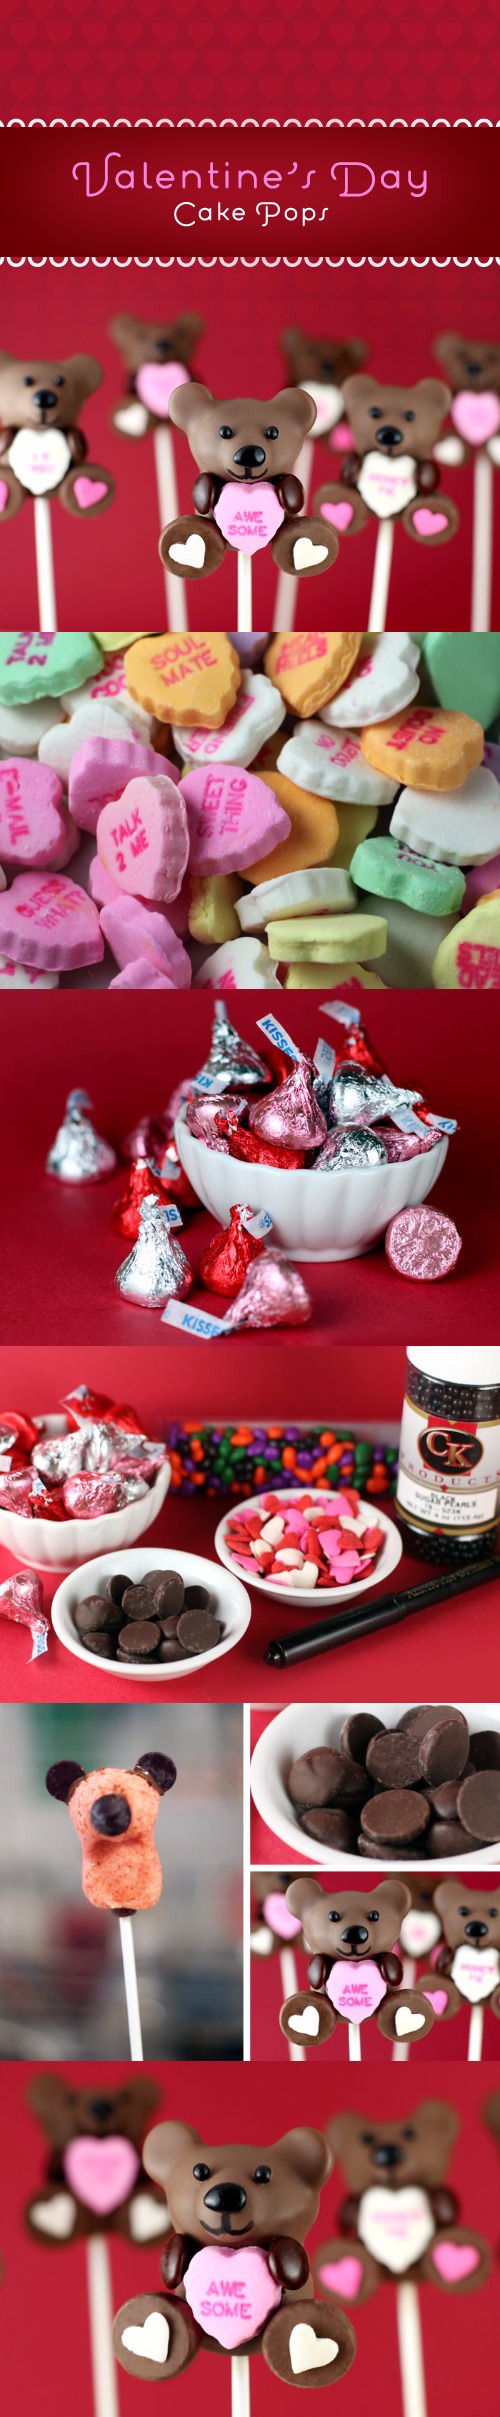 10-valentines-day-cake-pops